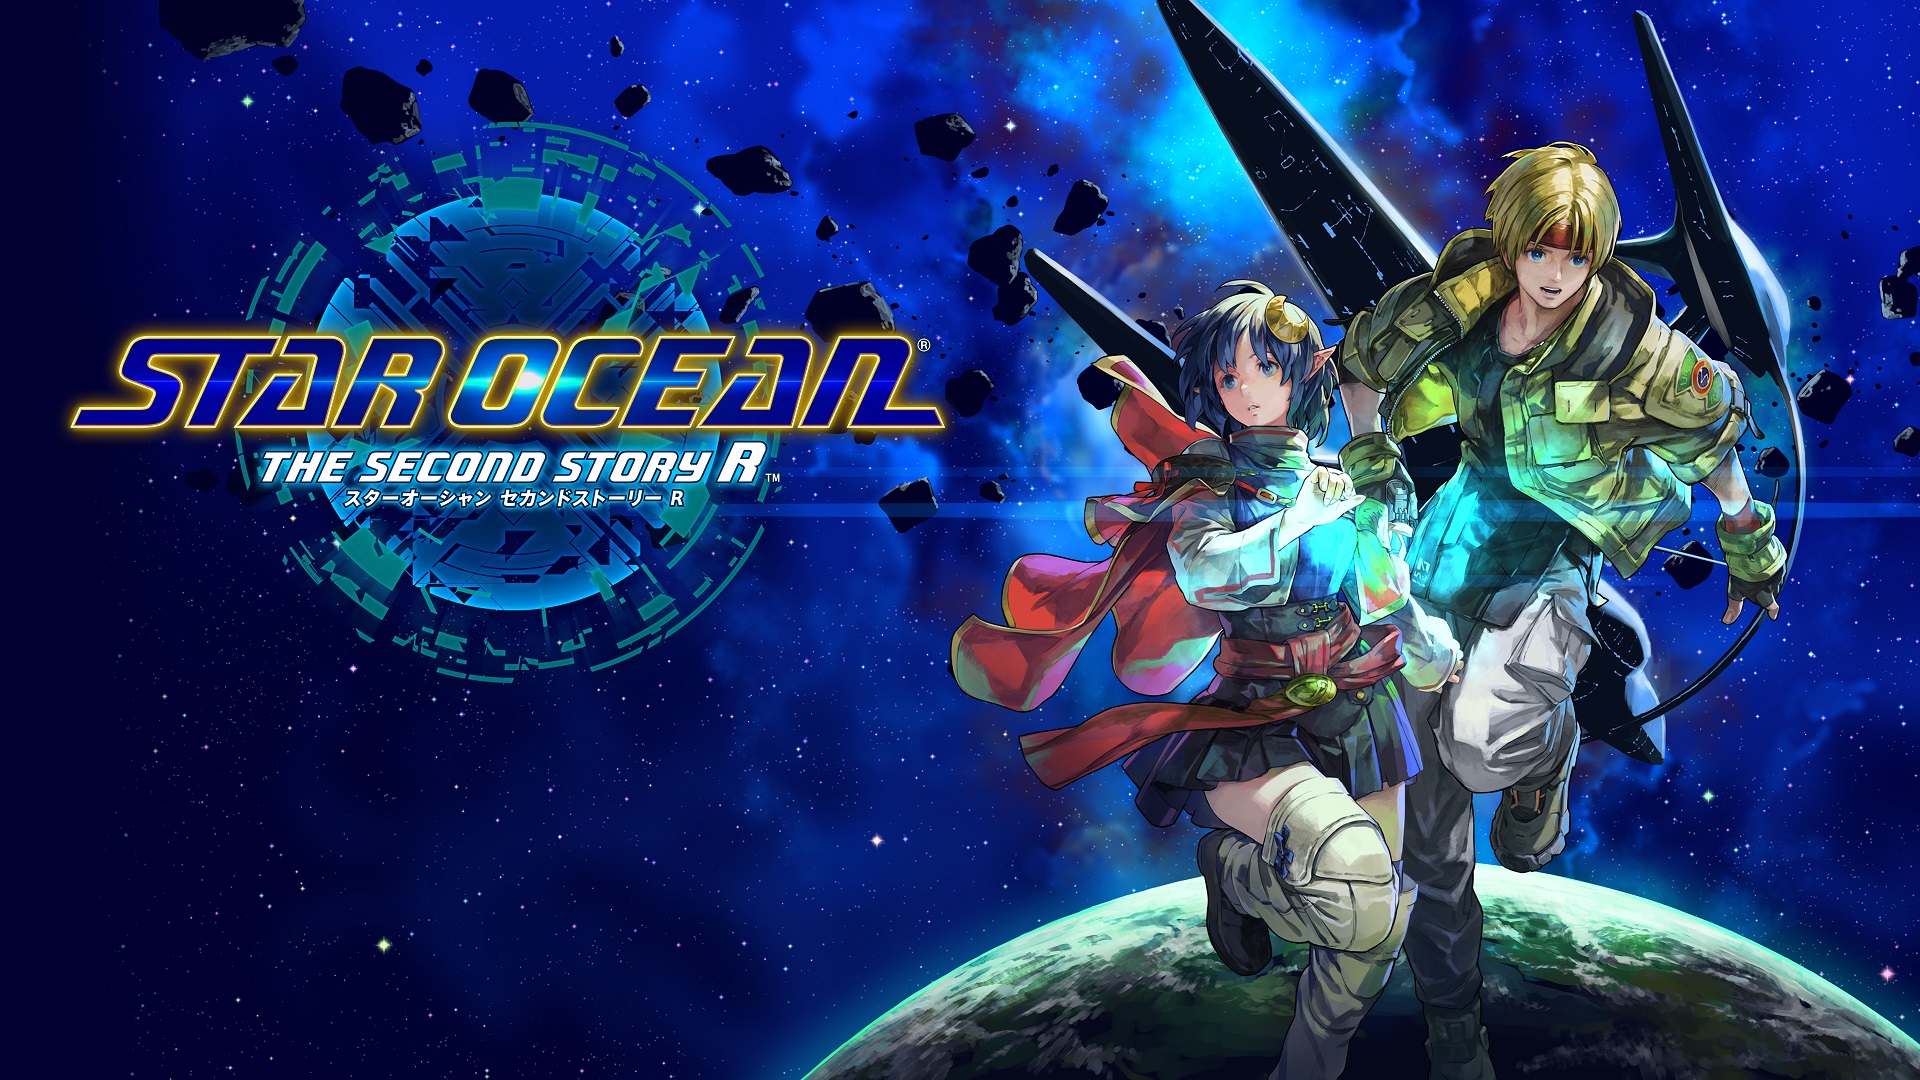 Star Ocean the Second Story R Physical Copy, Walkthrough, Gameplay